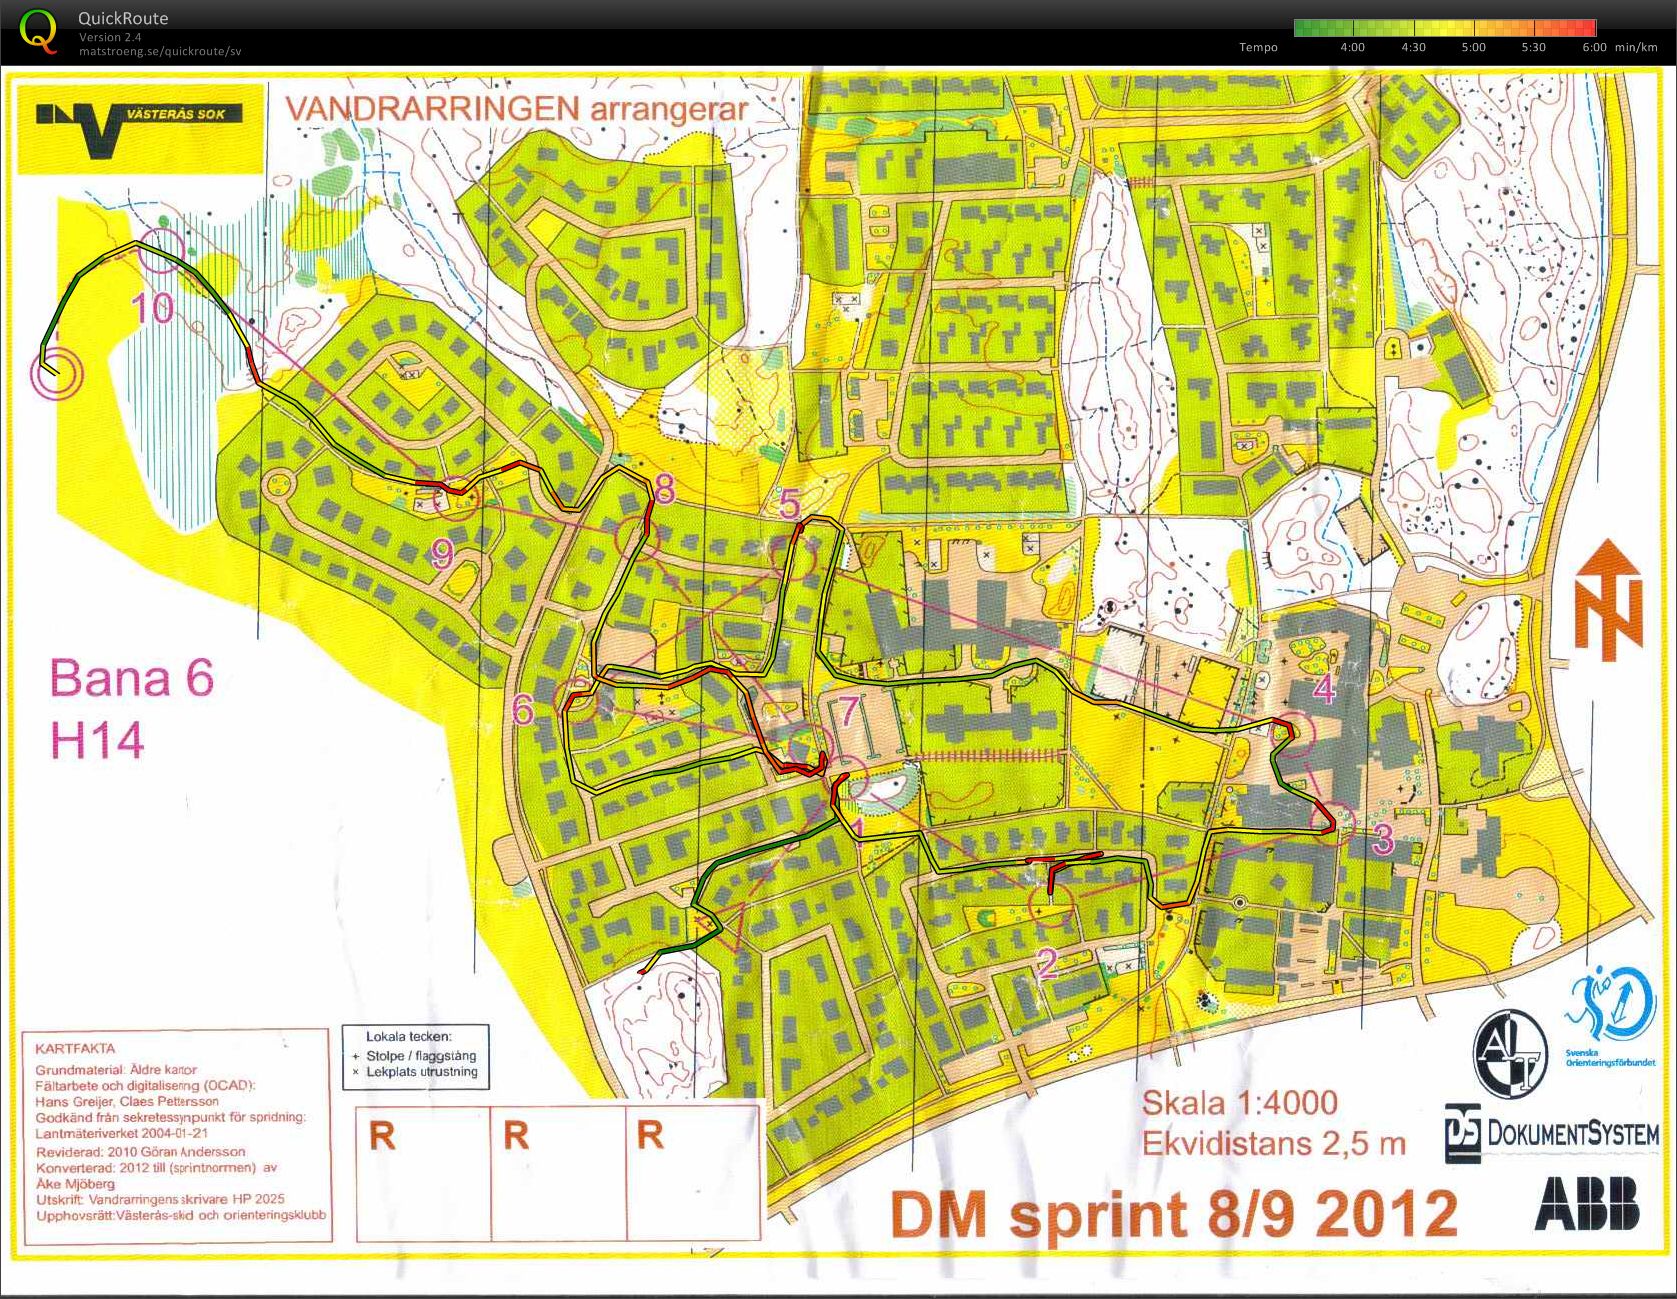 dm sprint 2012 (08/09/2012)